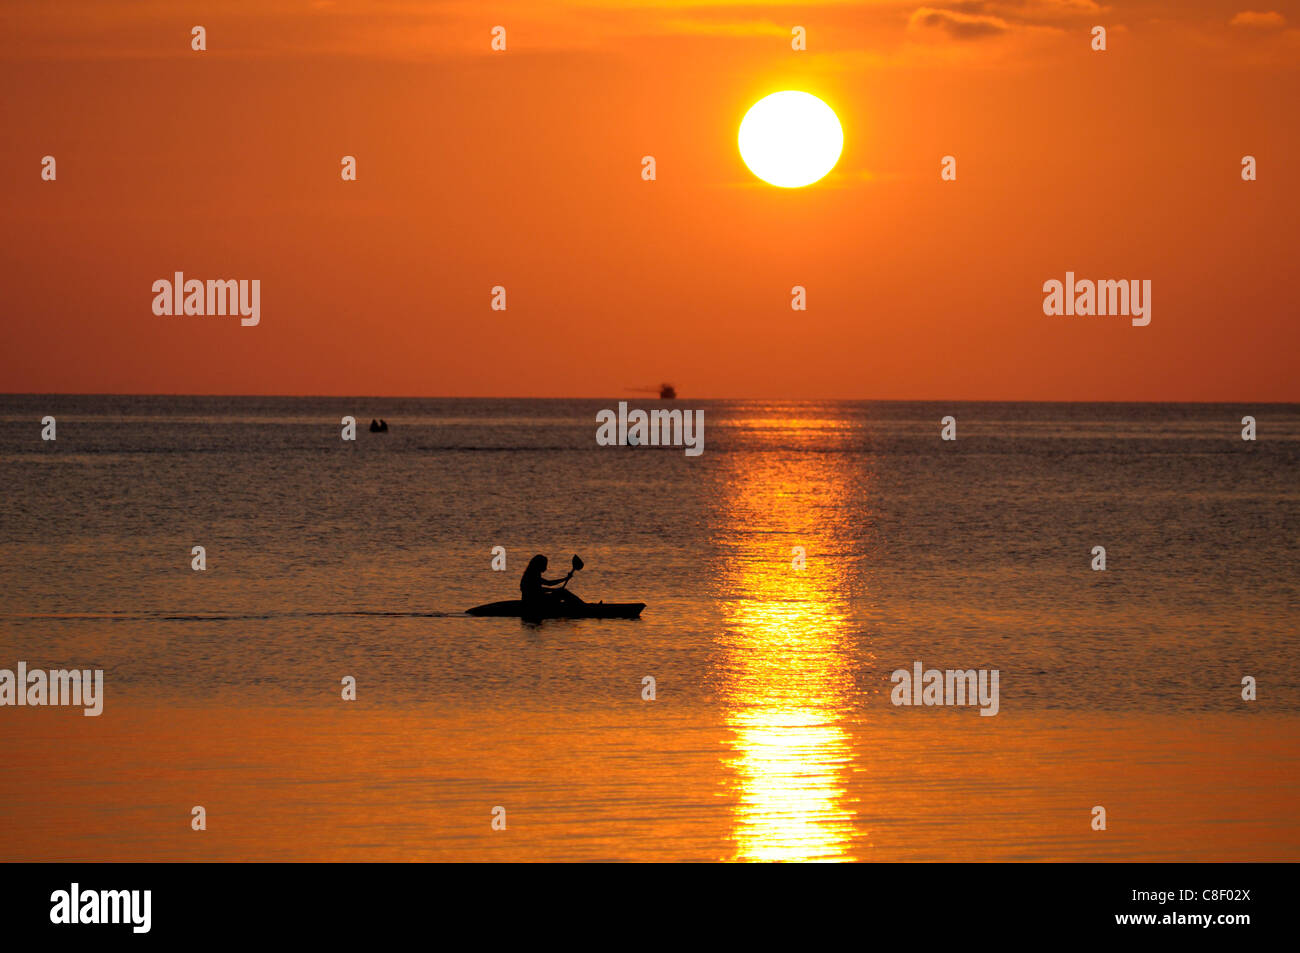 Kayaks, Sunset, Sai Ree, Beach, Koh Tao, Thailand, Asia, Stock Photo